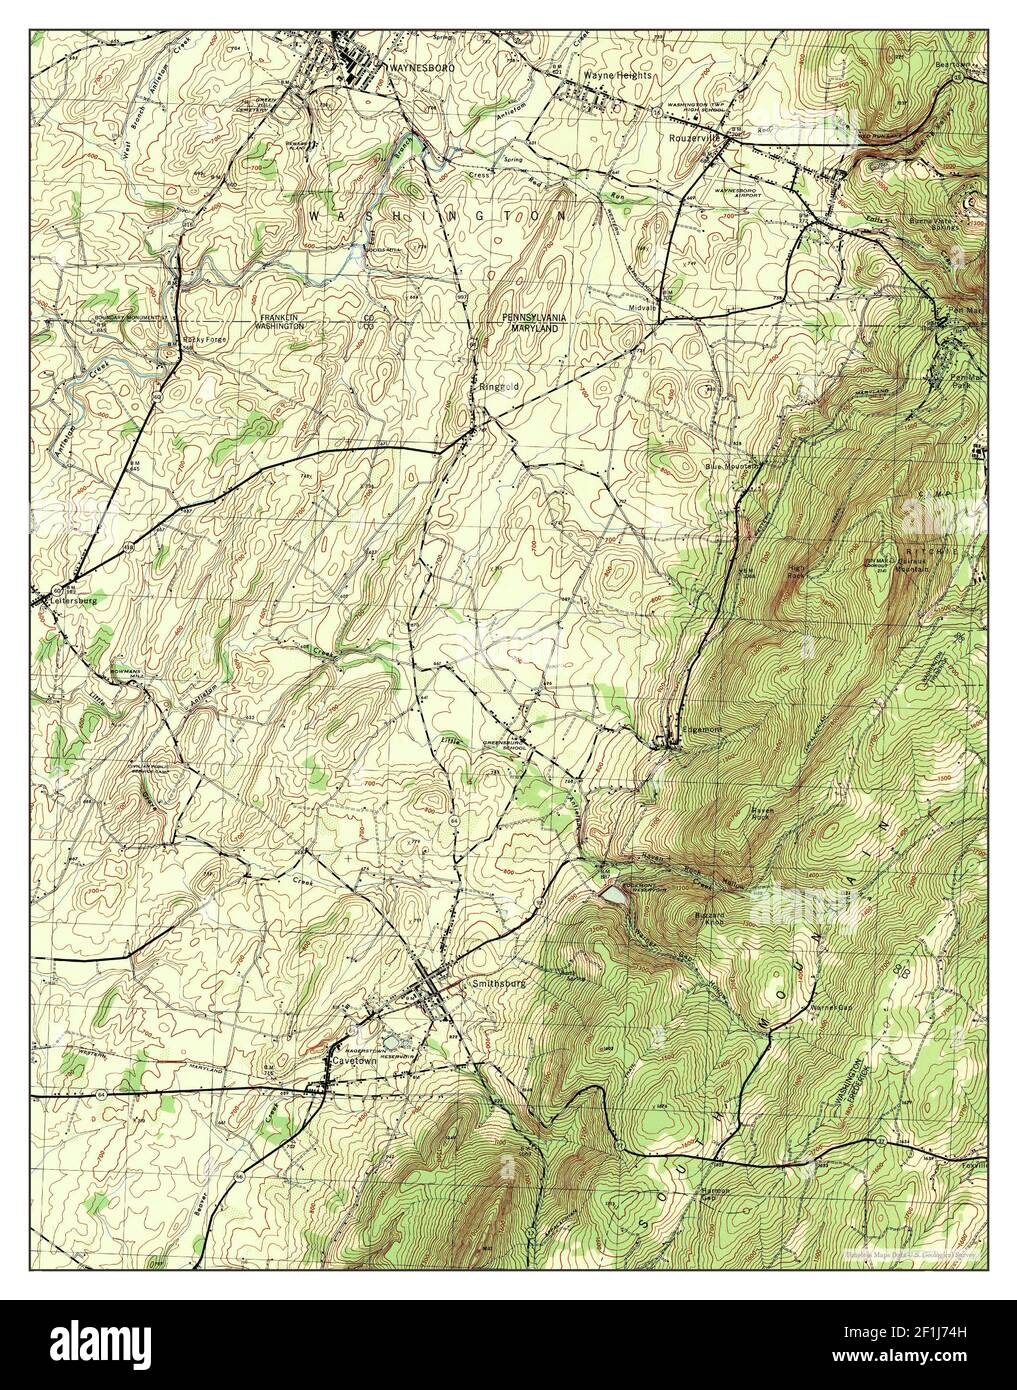 Smithsburg, Maryland, map 1944, 1:31680, United States of America by Timeless Maps, data U.S. Geological Survey Stock Photo